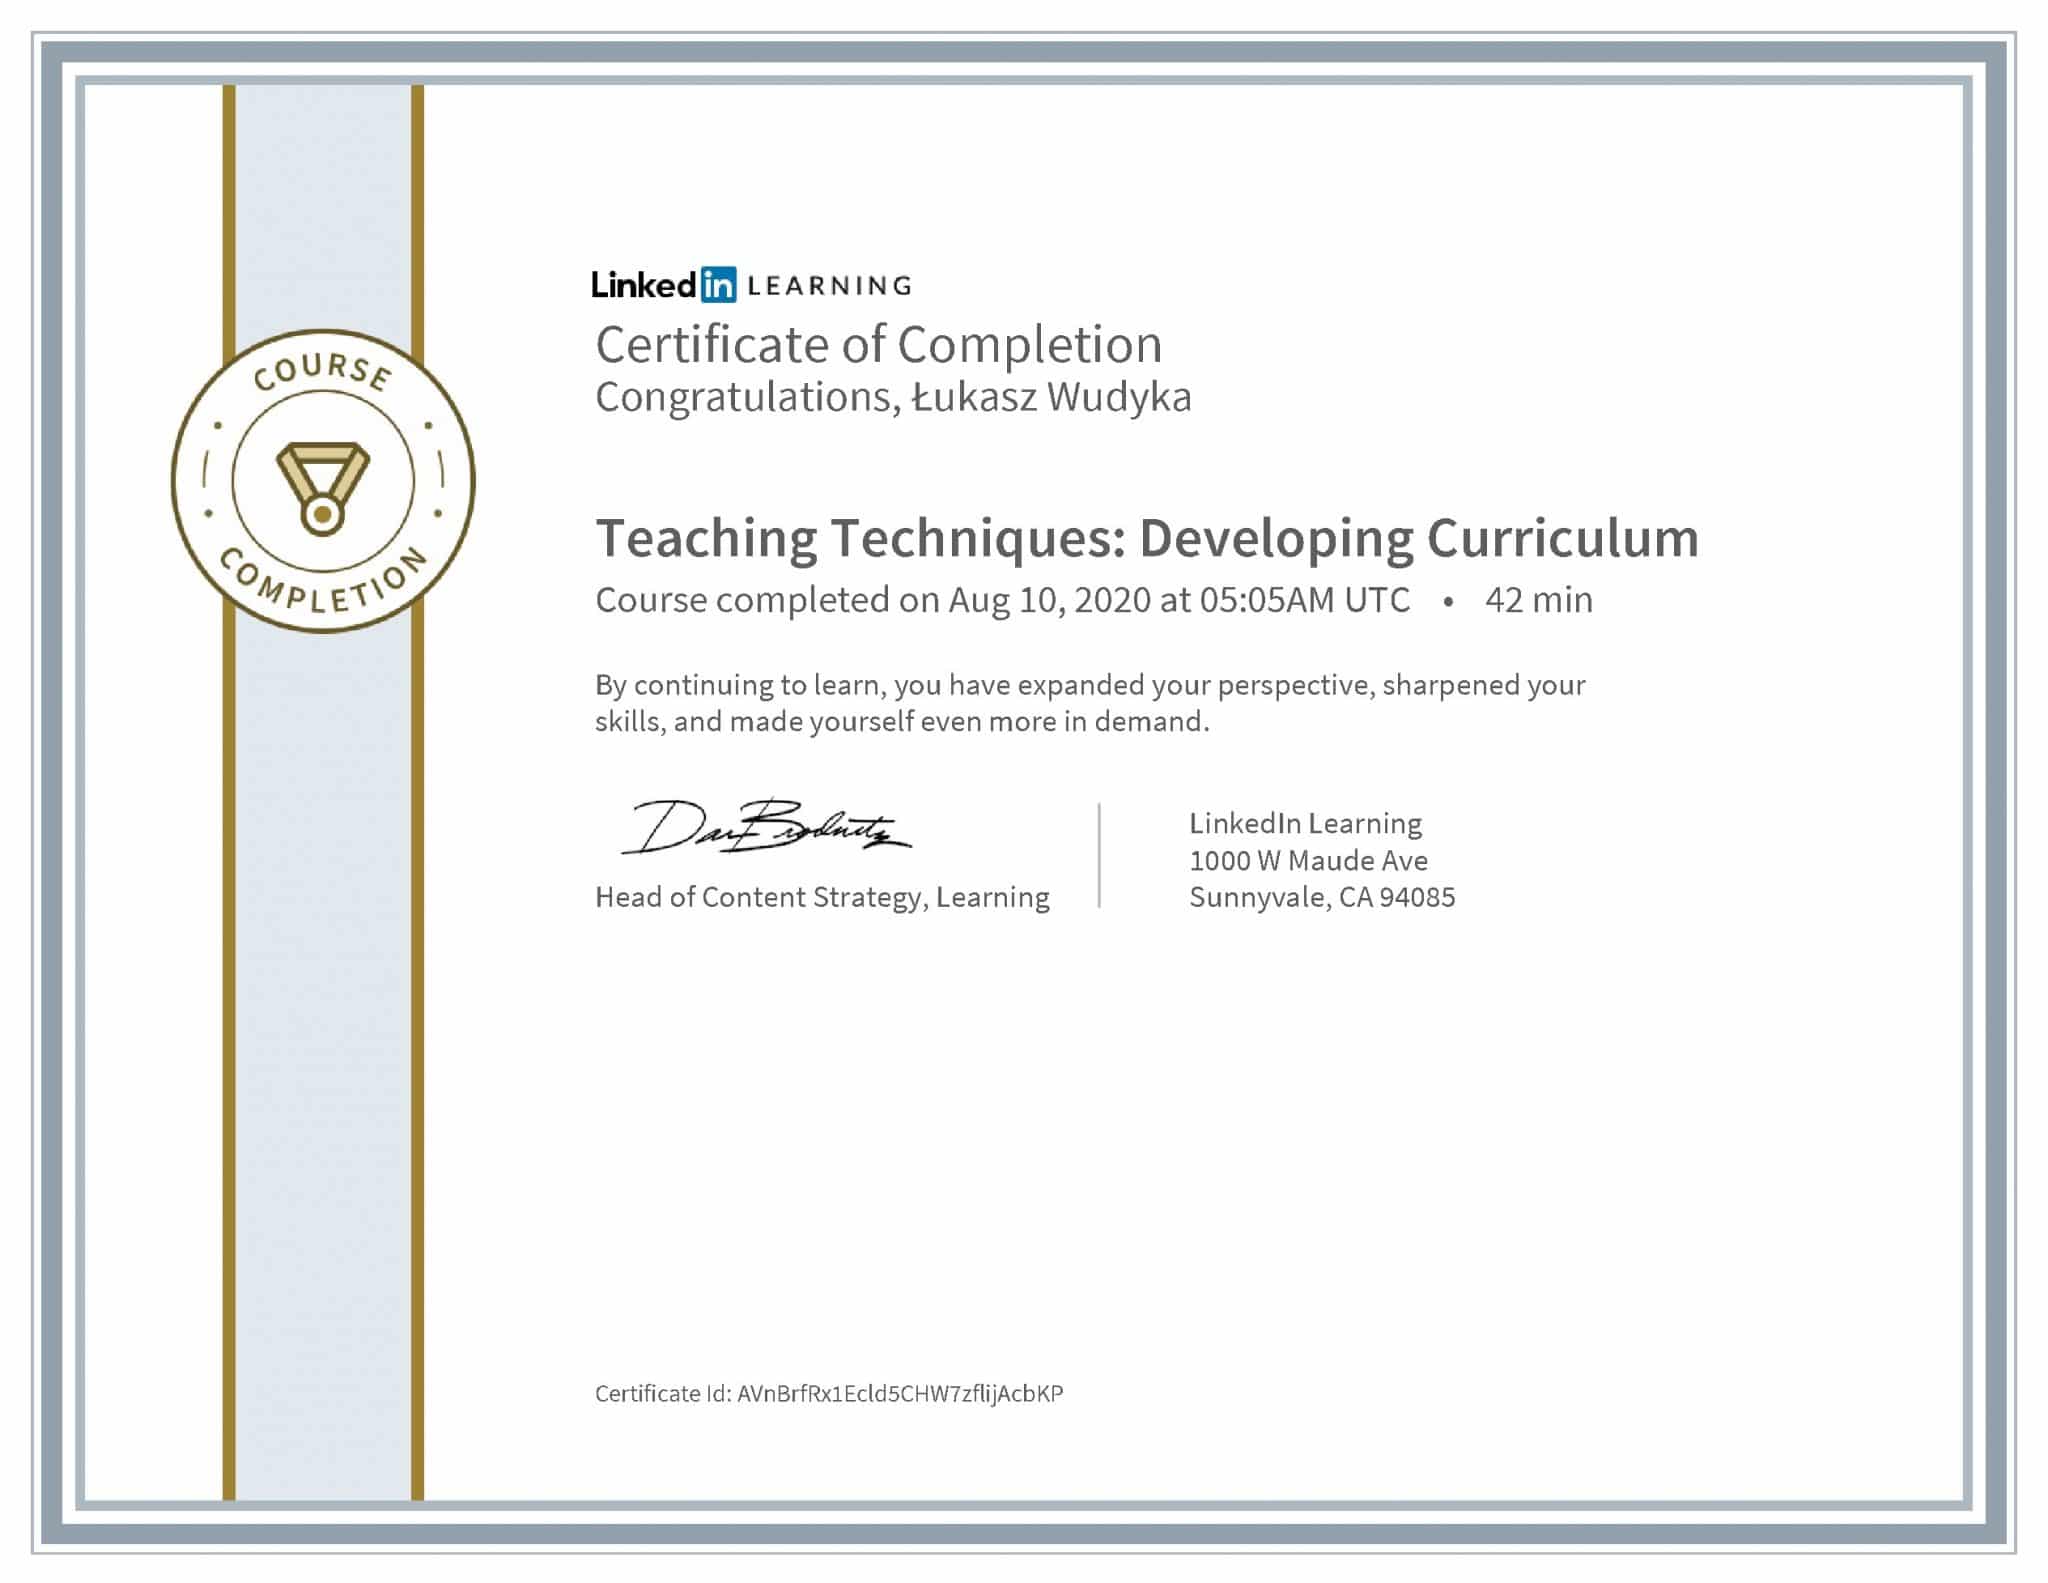 Łukasz Wudyka certyfikat LinkedIn Teaching Techniques: Developing Curriculum